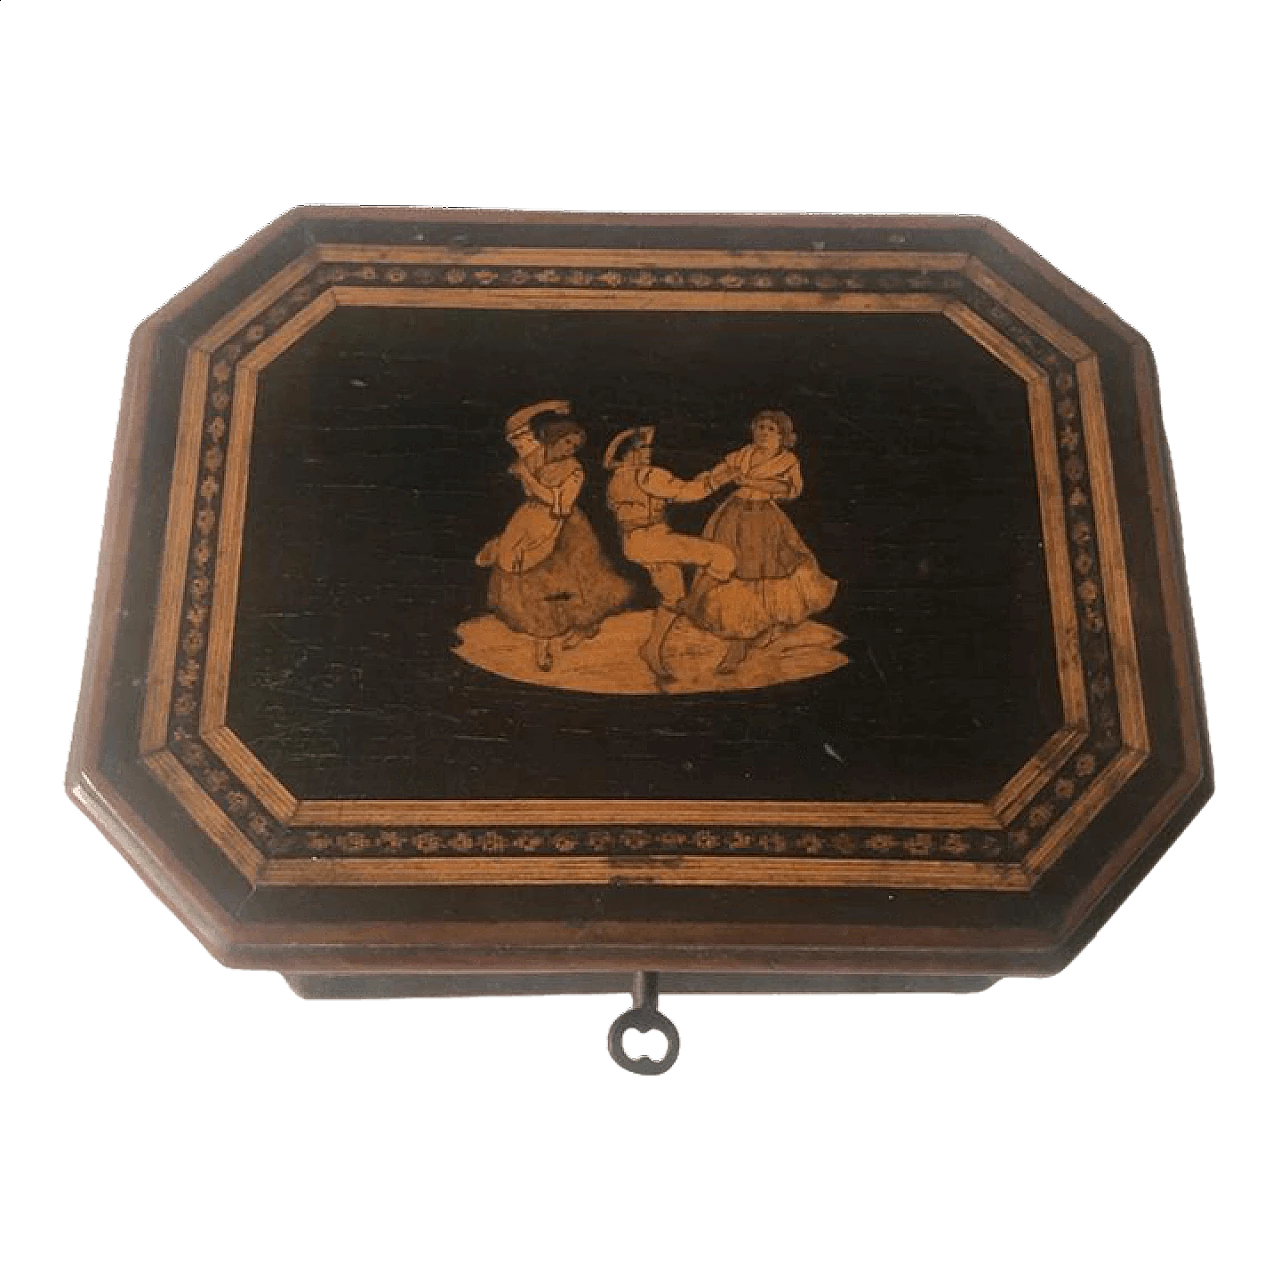 Sorrentine jewelry box in inlaid wood, 19th century 1400588